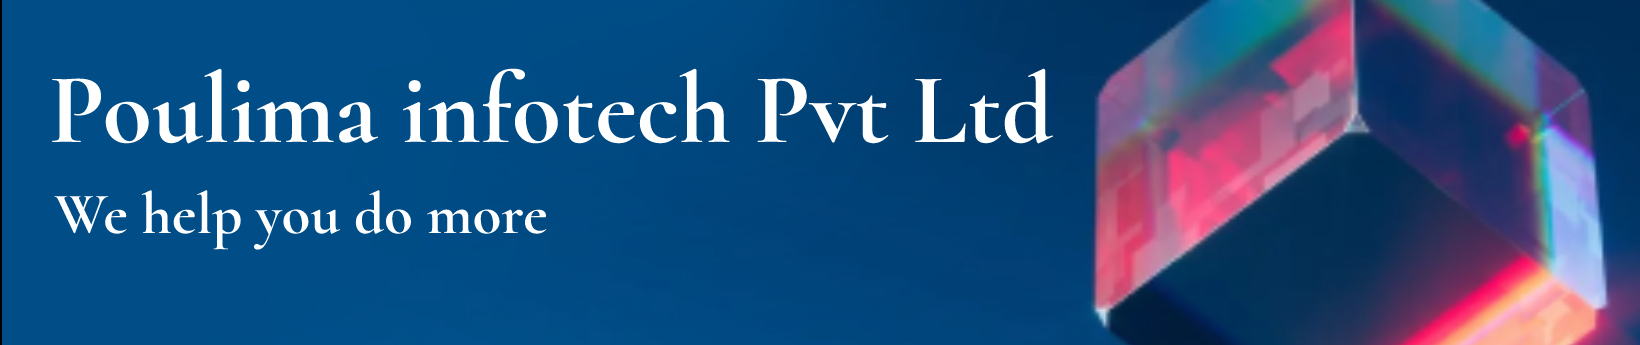 Poulima Infotech Pvt Ltd's profile banner